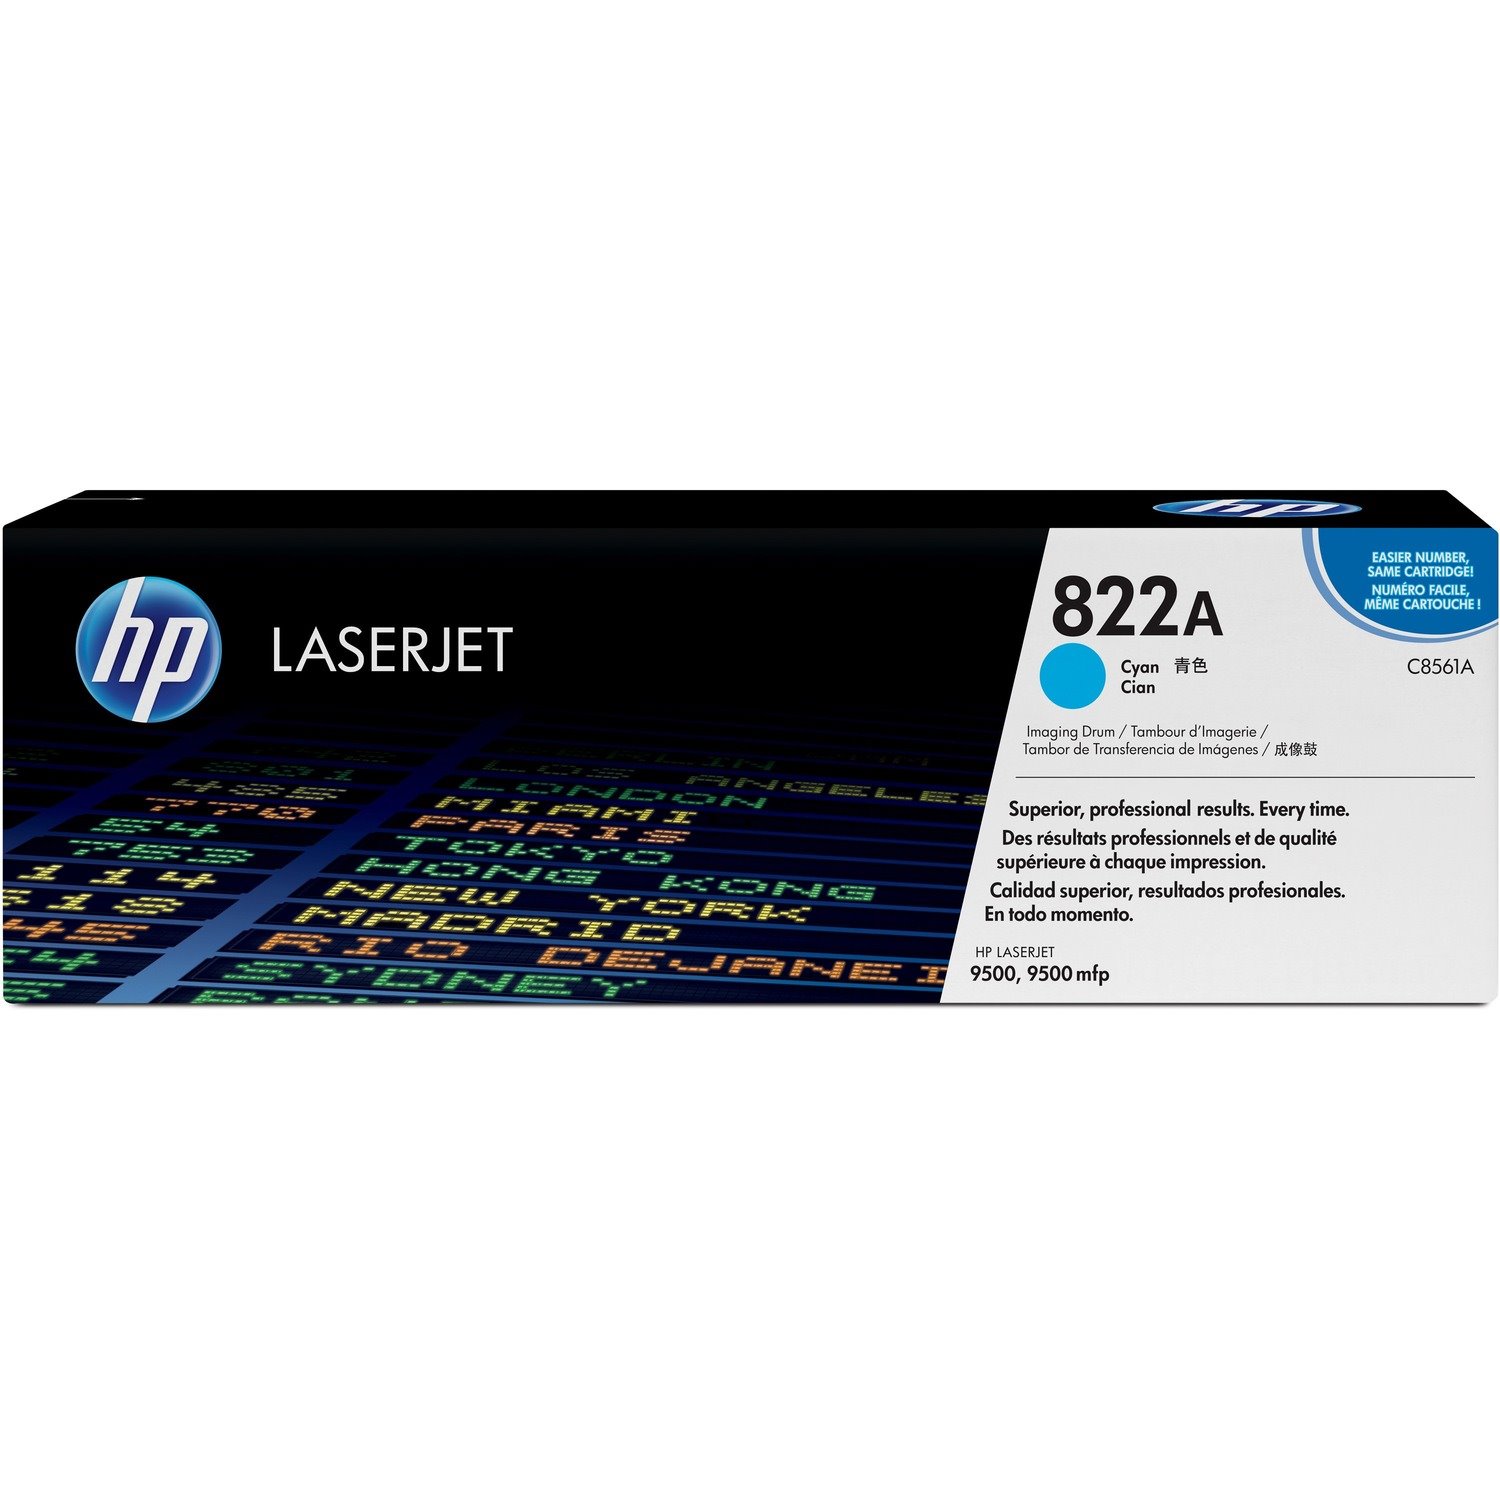 HP 822A Laser Imaging Drum - Cyan